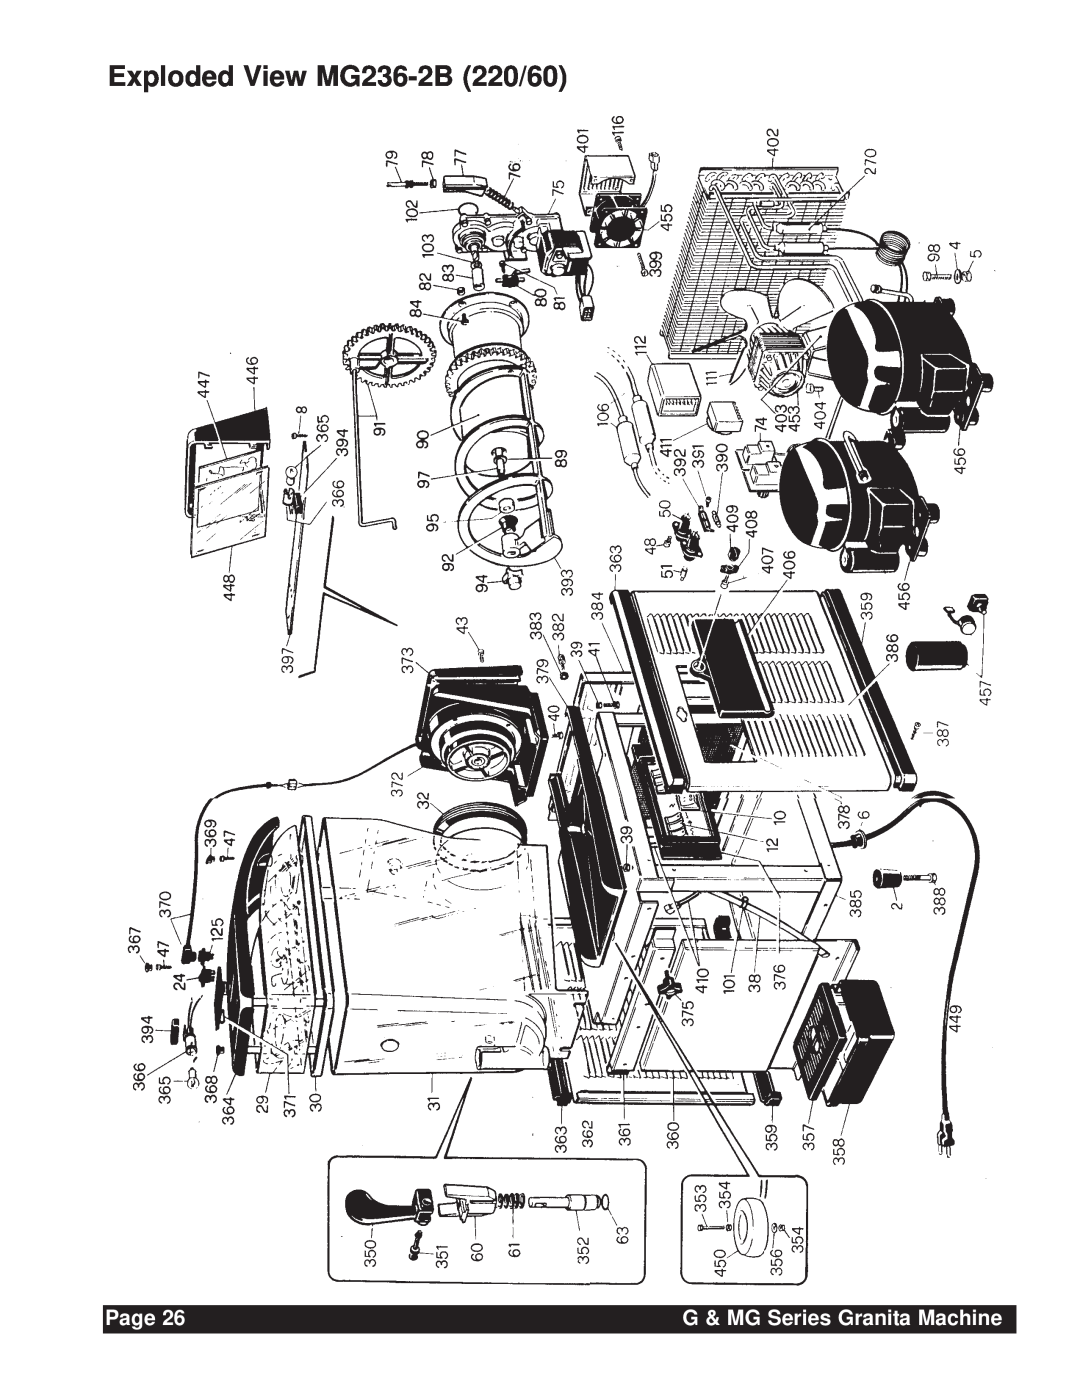 Grindmaster instruction manual Exploded View MG236-2B 220/60, Page, G & MG Series Granita Machine 